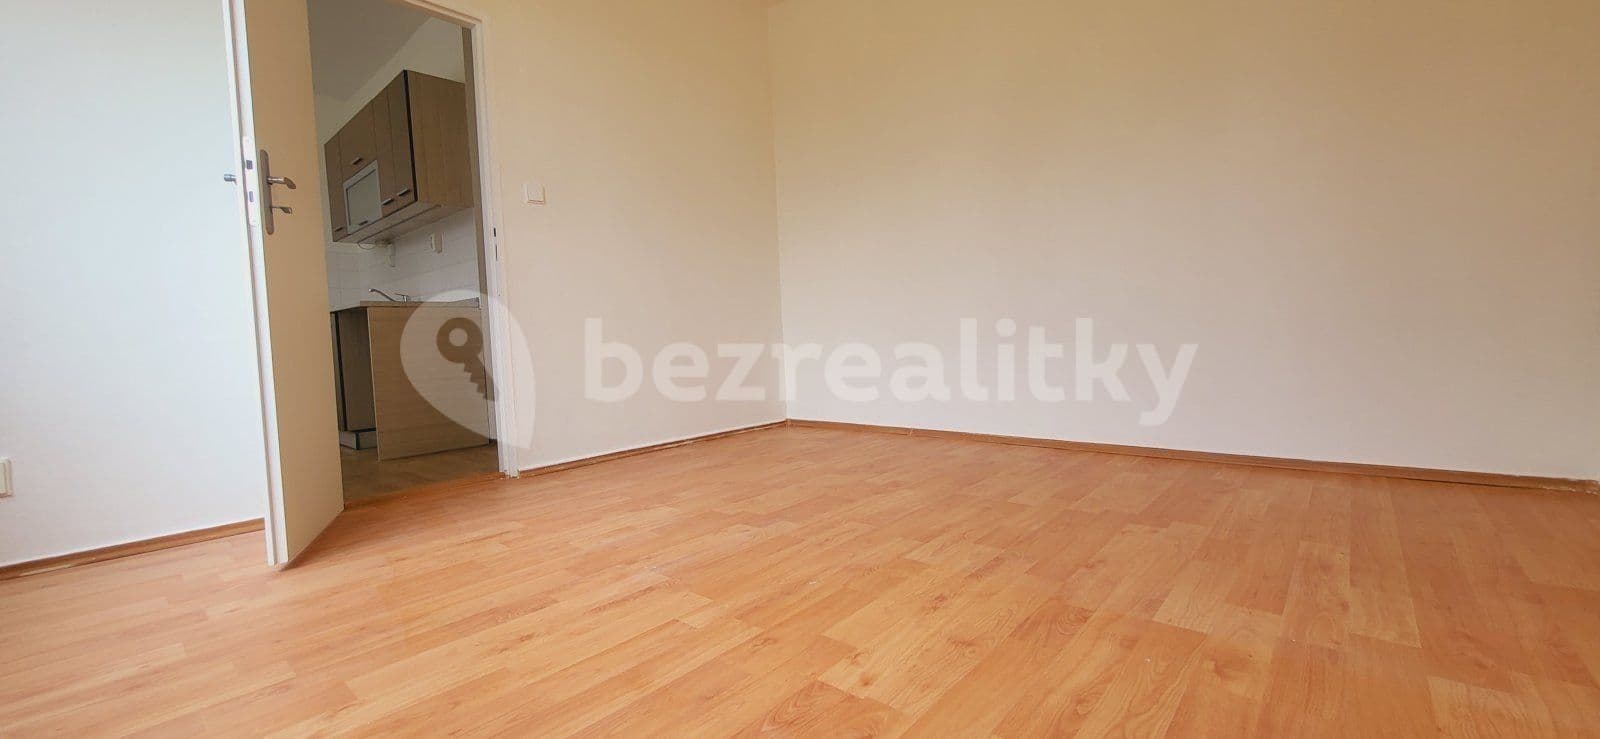 Prenájom bytu 2-izbový 50 m², Beskydská, Havířov, Moravskoslezský kraj